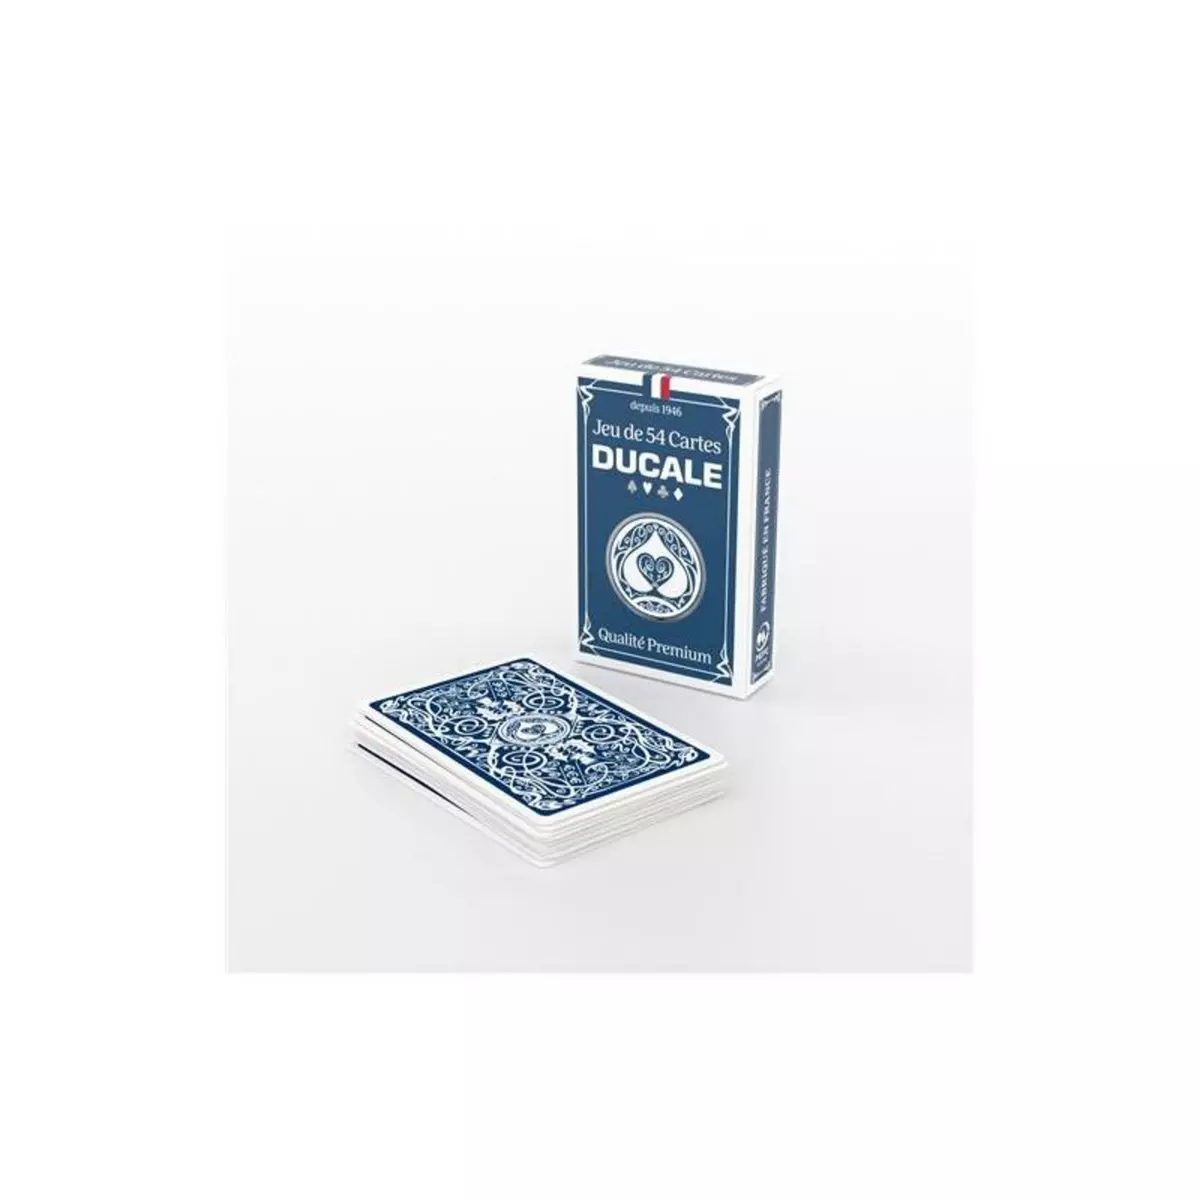 DUCALE Jeu classique Ducale Origine 54 cartes